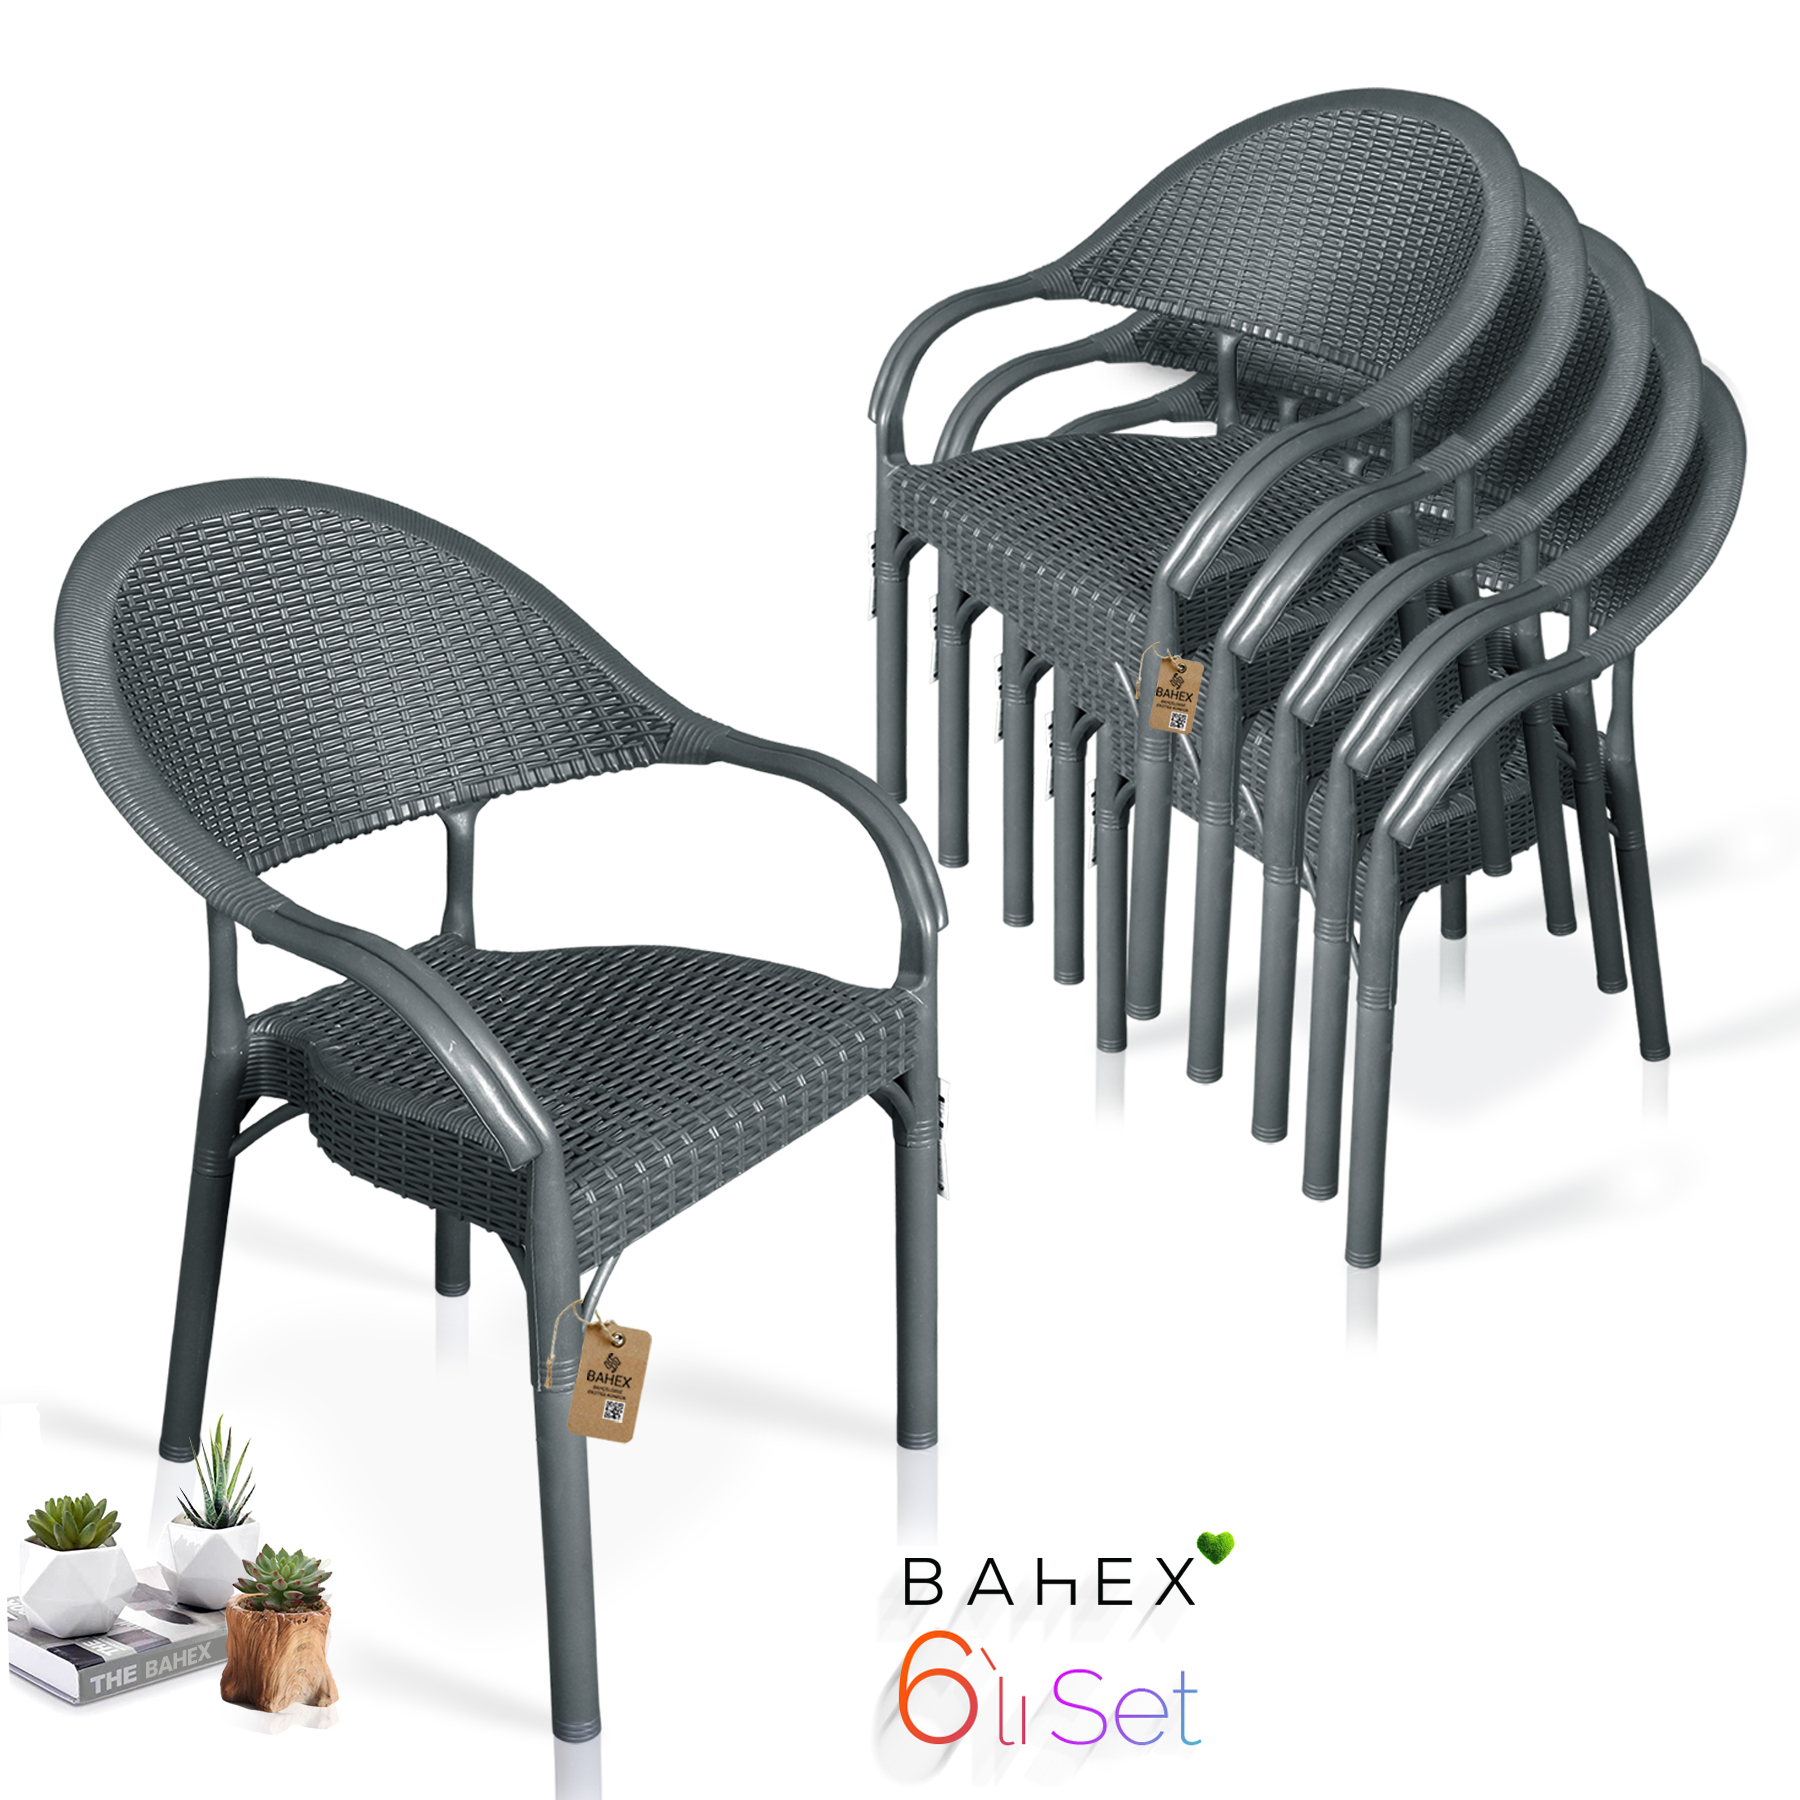 Bahex Bambu 6lı Set Rattan Bahçe Sandalye 6ad Koltuk Siyah